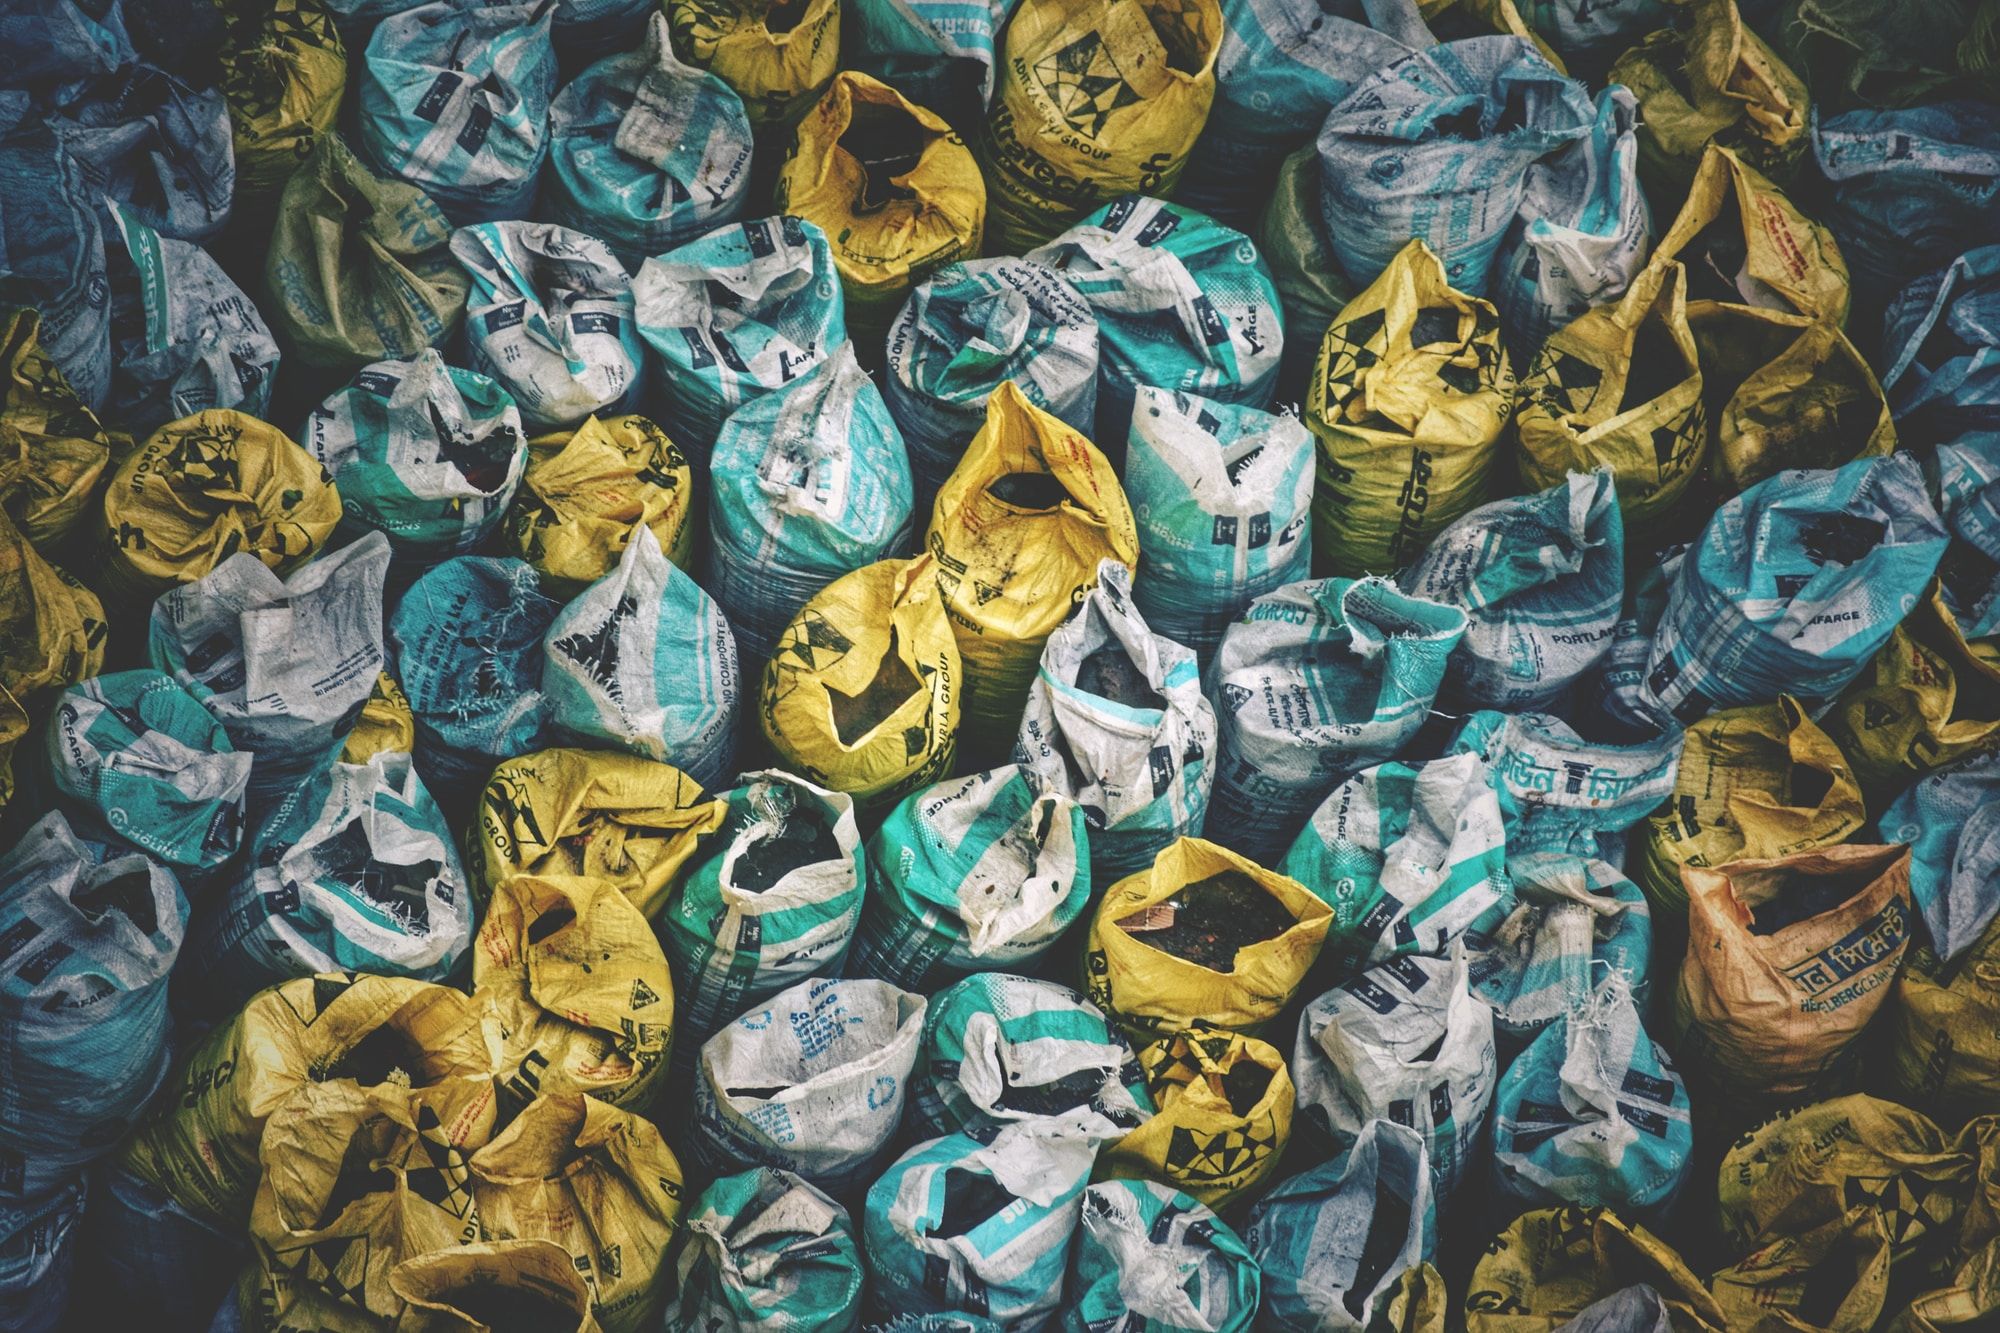 Composting bags full of food waste